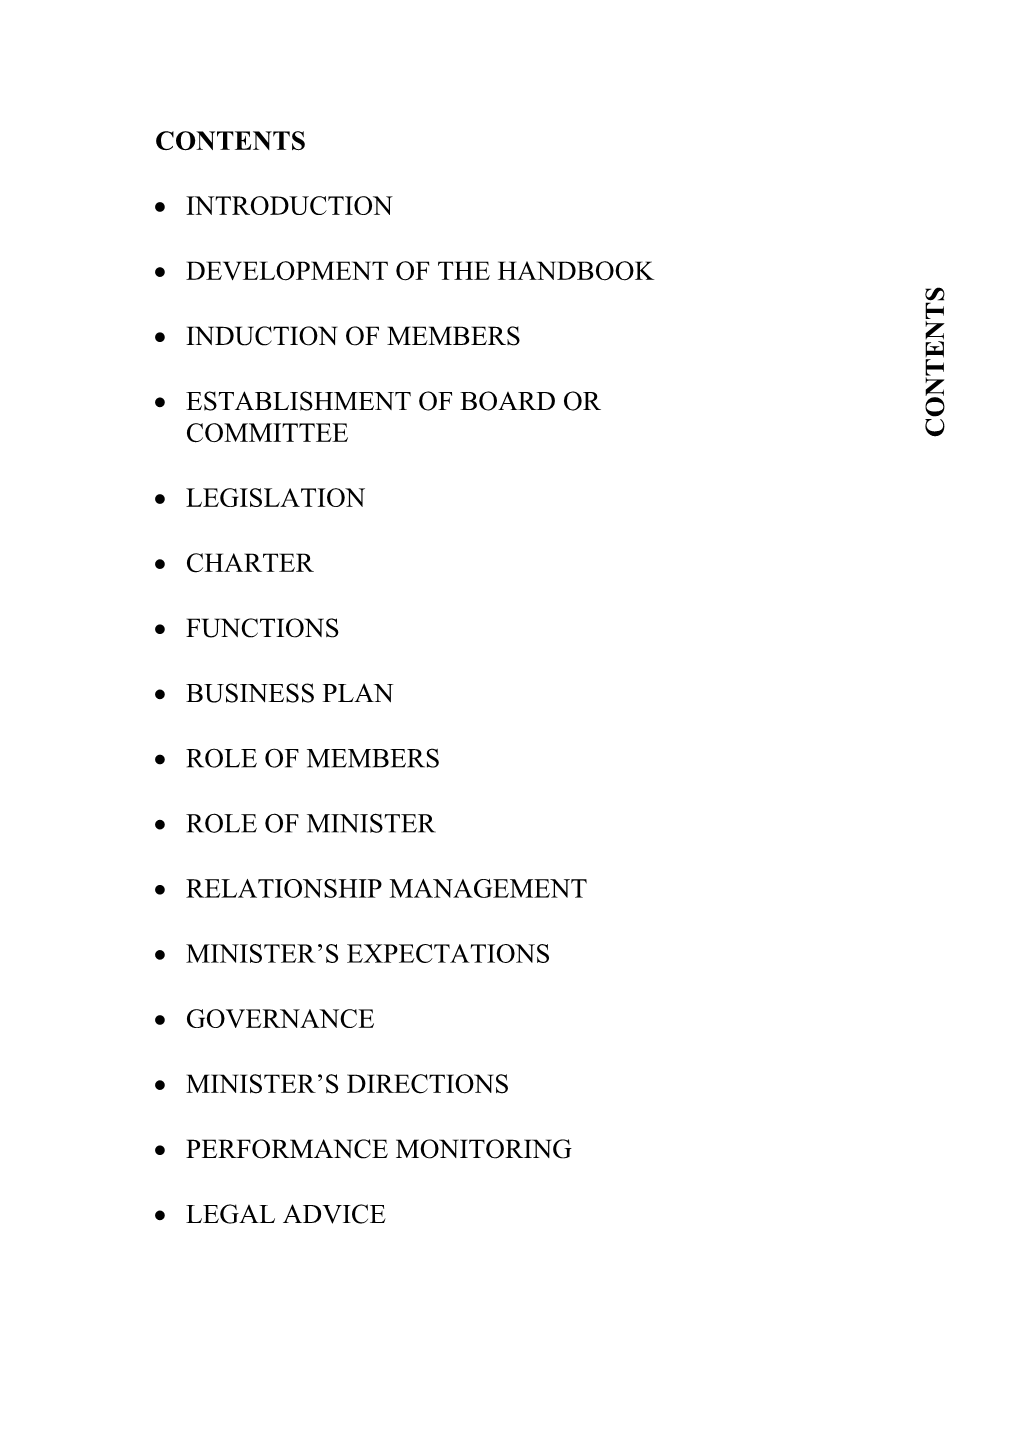 Development of the Handbook